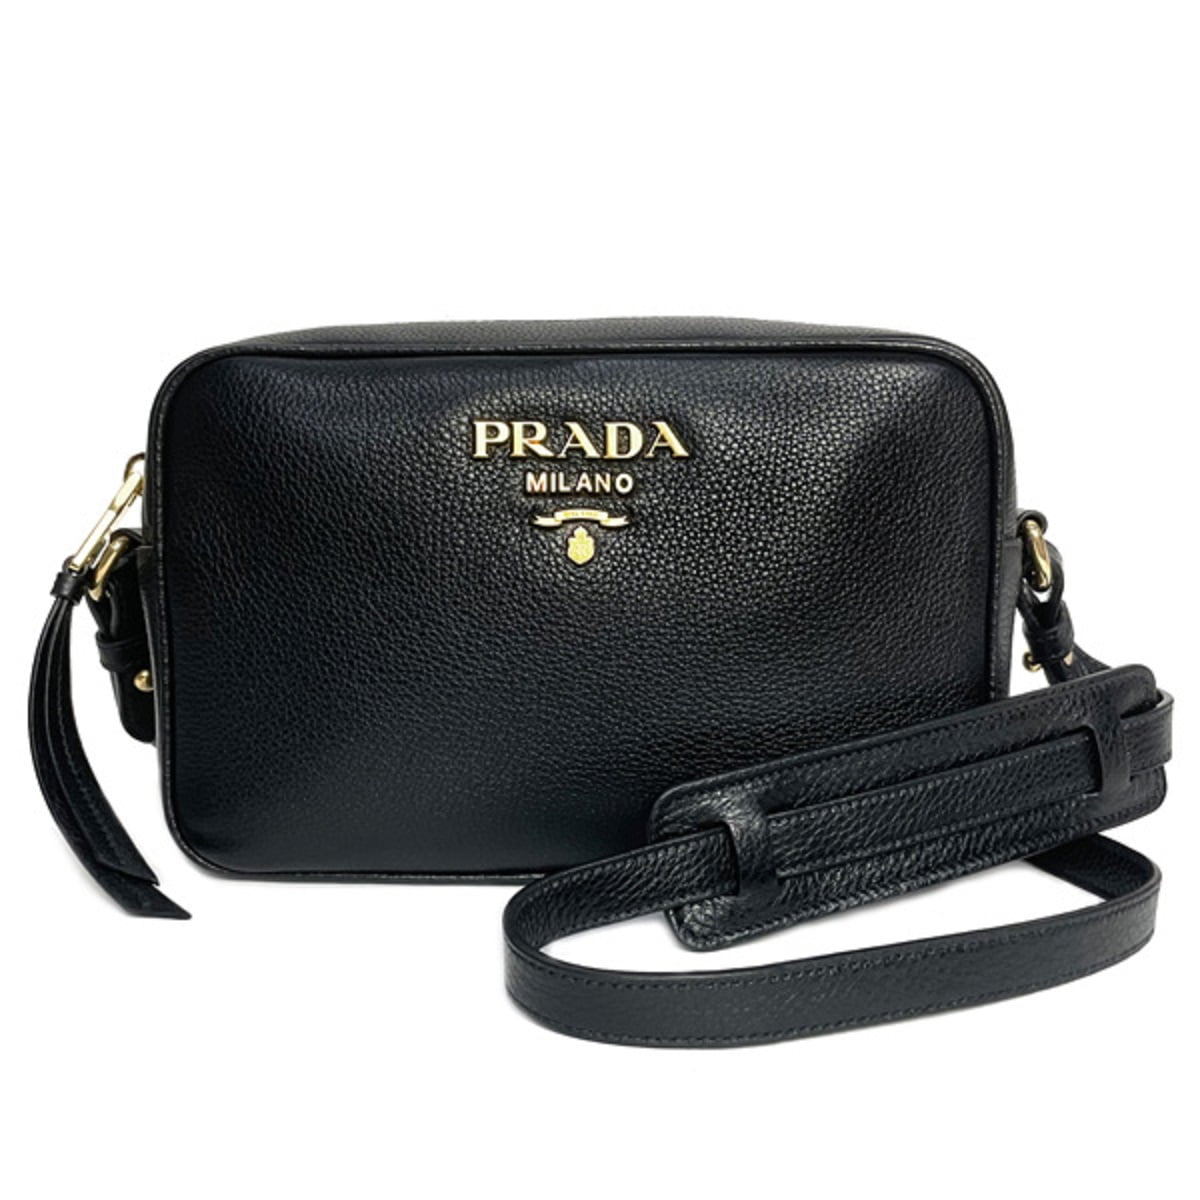 Black Large Prada Galleria Saffiano Leather Bag | PRADA